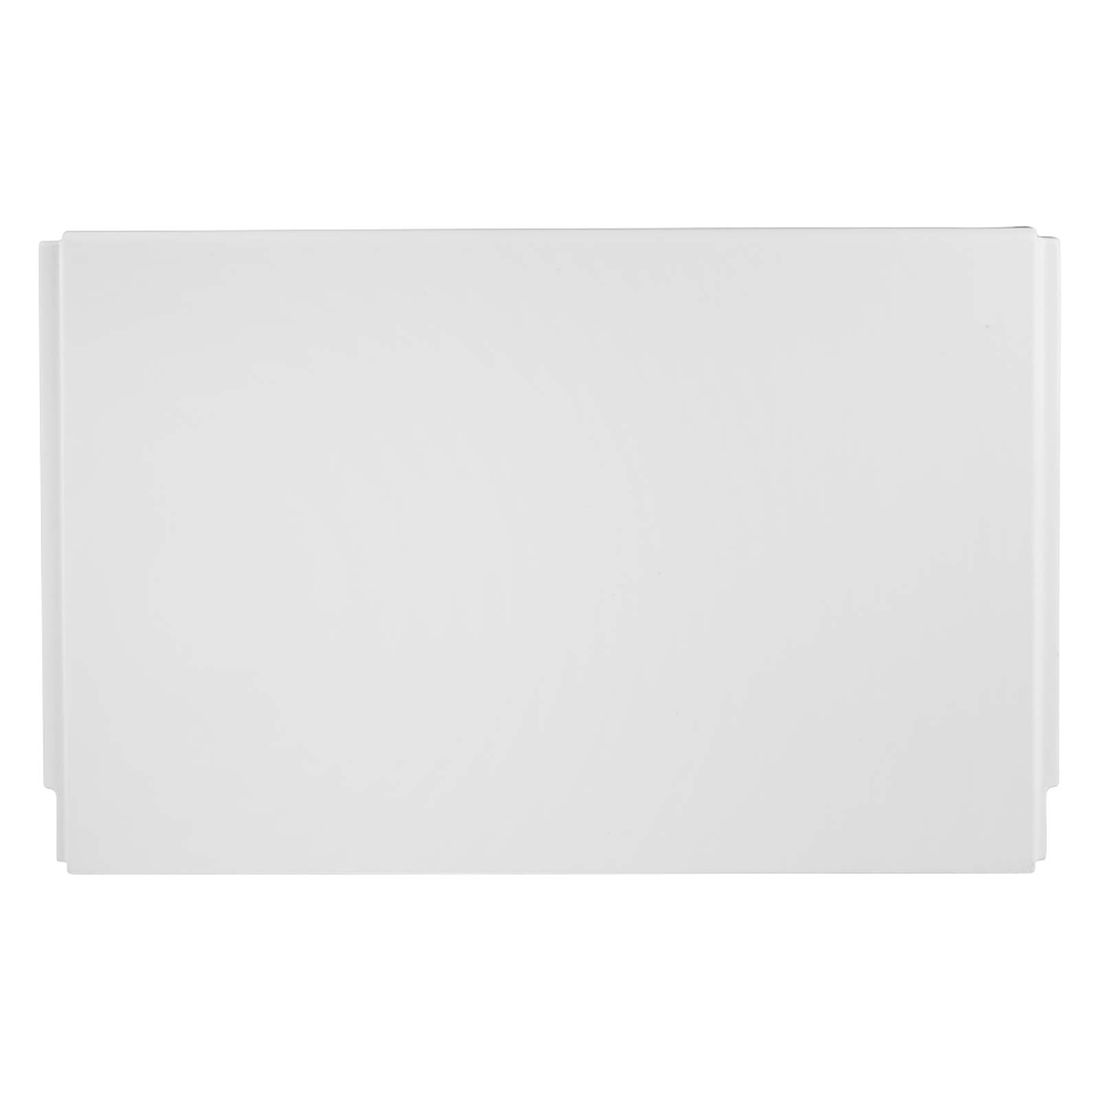 K-Vit Acrylic End Bath Panel White 700 X 550Mm